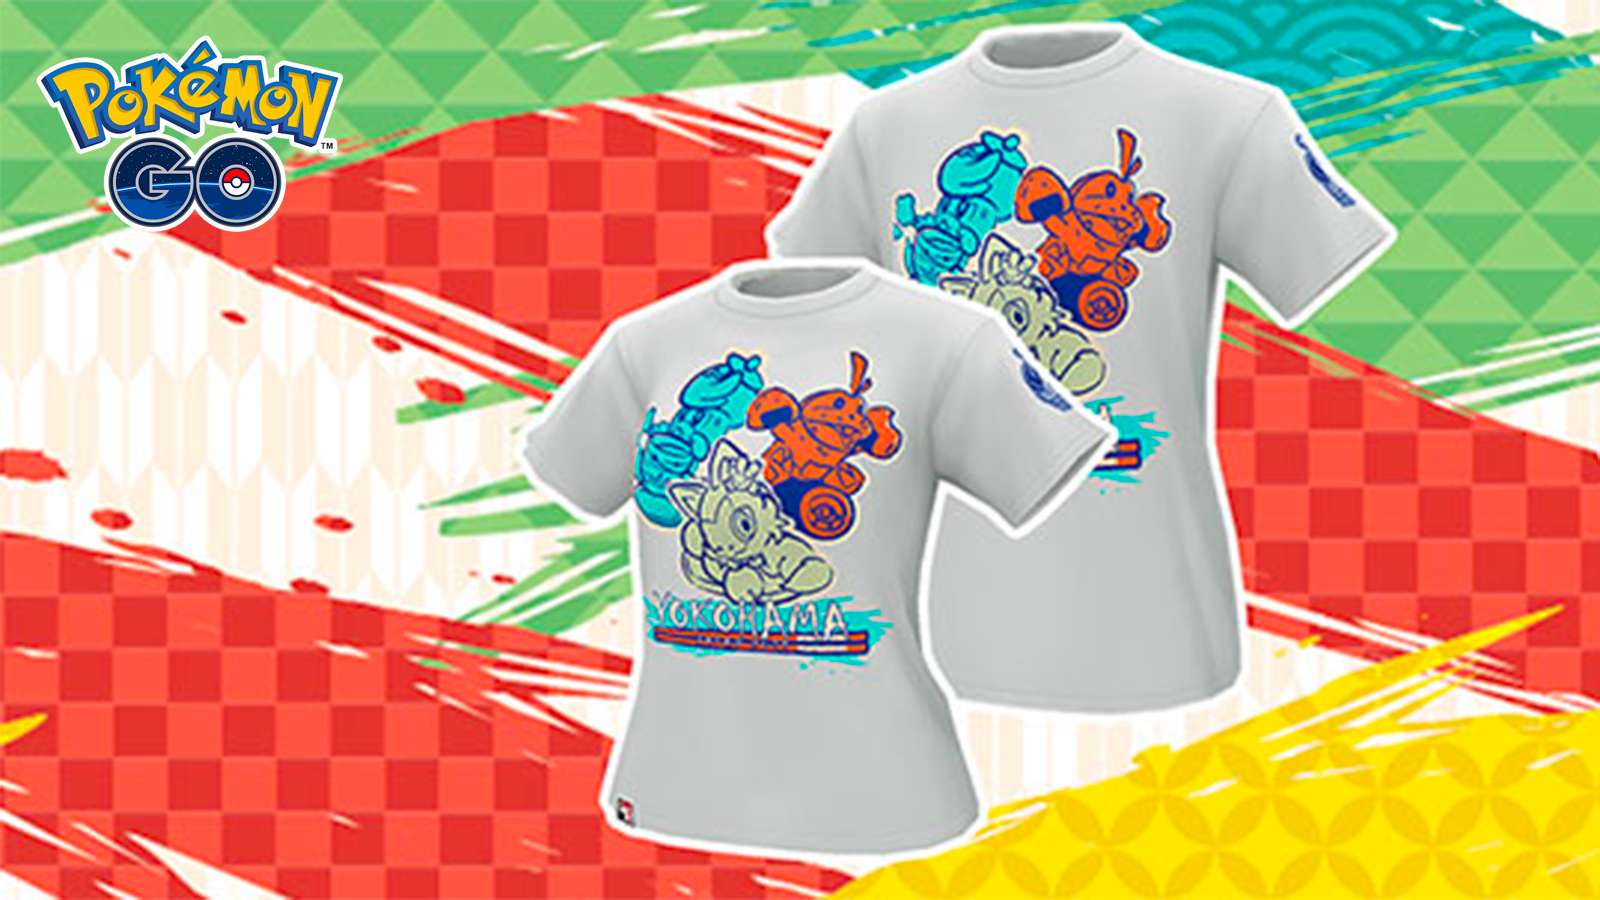 Free Pokemon Go World Championships t-shirt